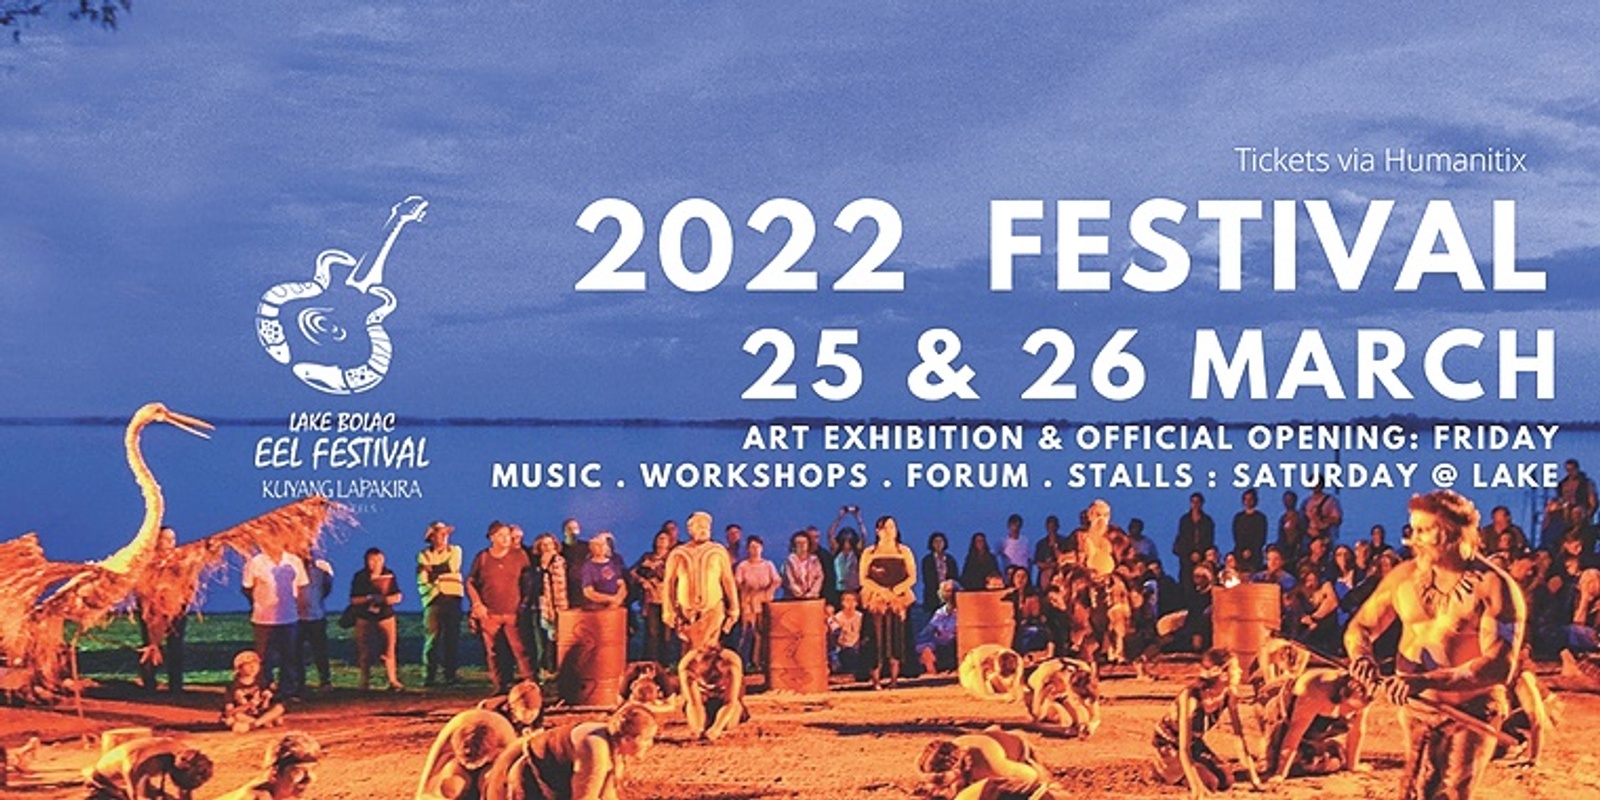 Lake Bolac Eel Festival - 25 & 26 March 2022